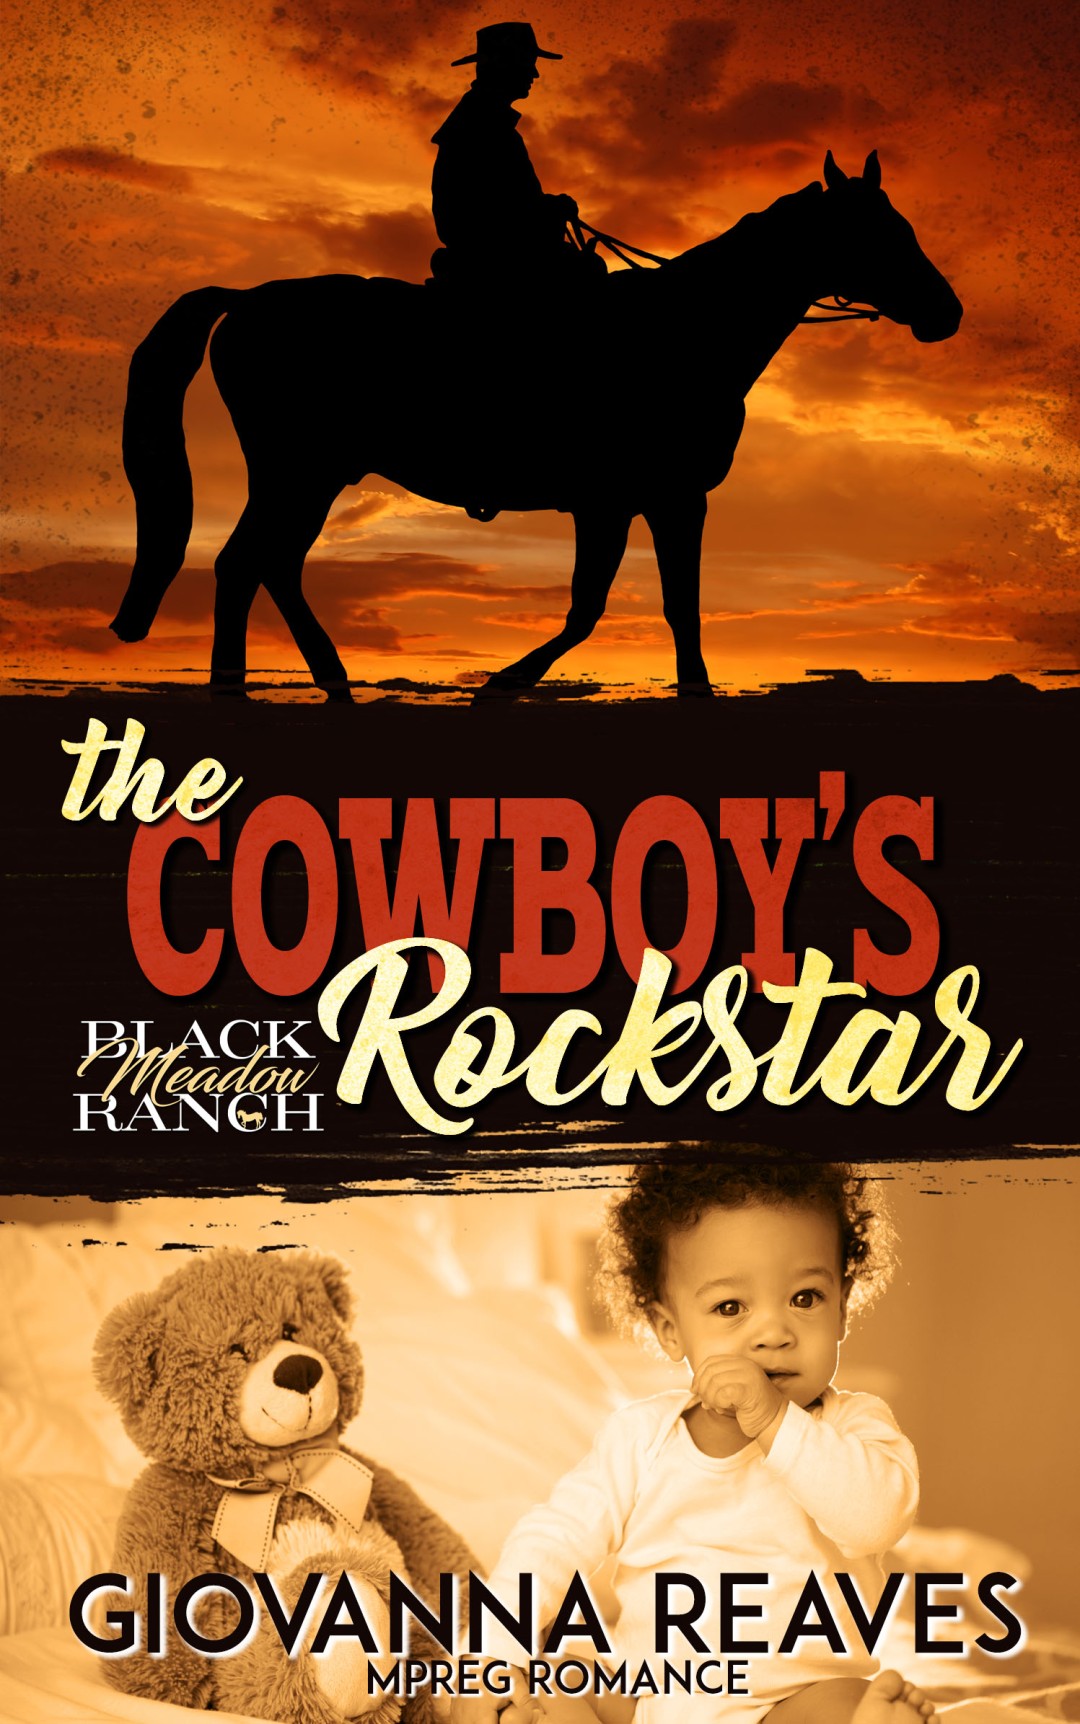 The Cowboy's Rockstar 5x8 - Ebook